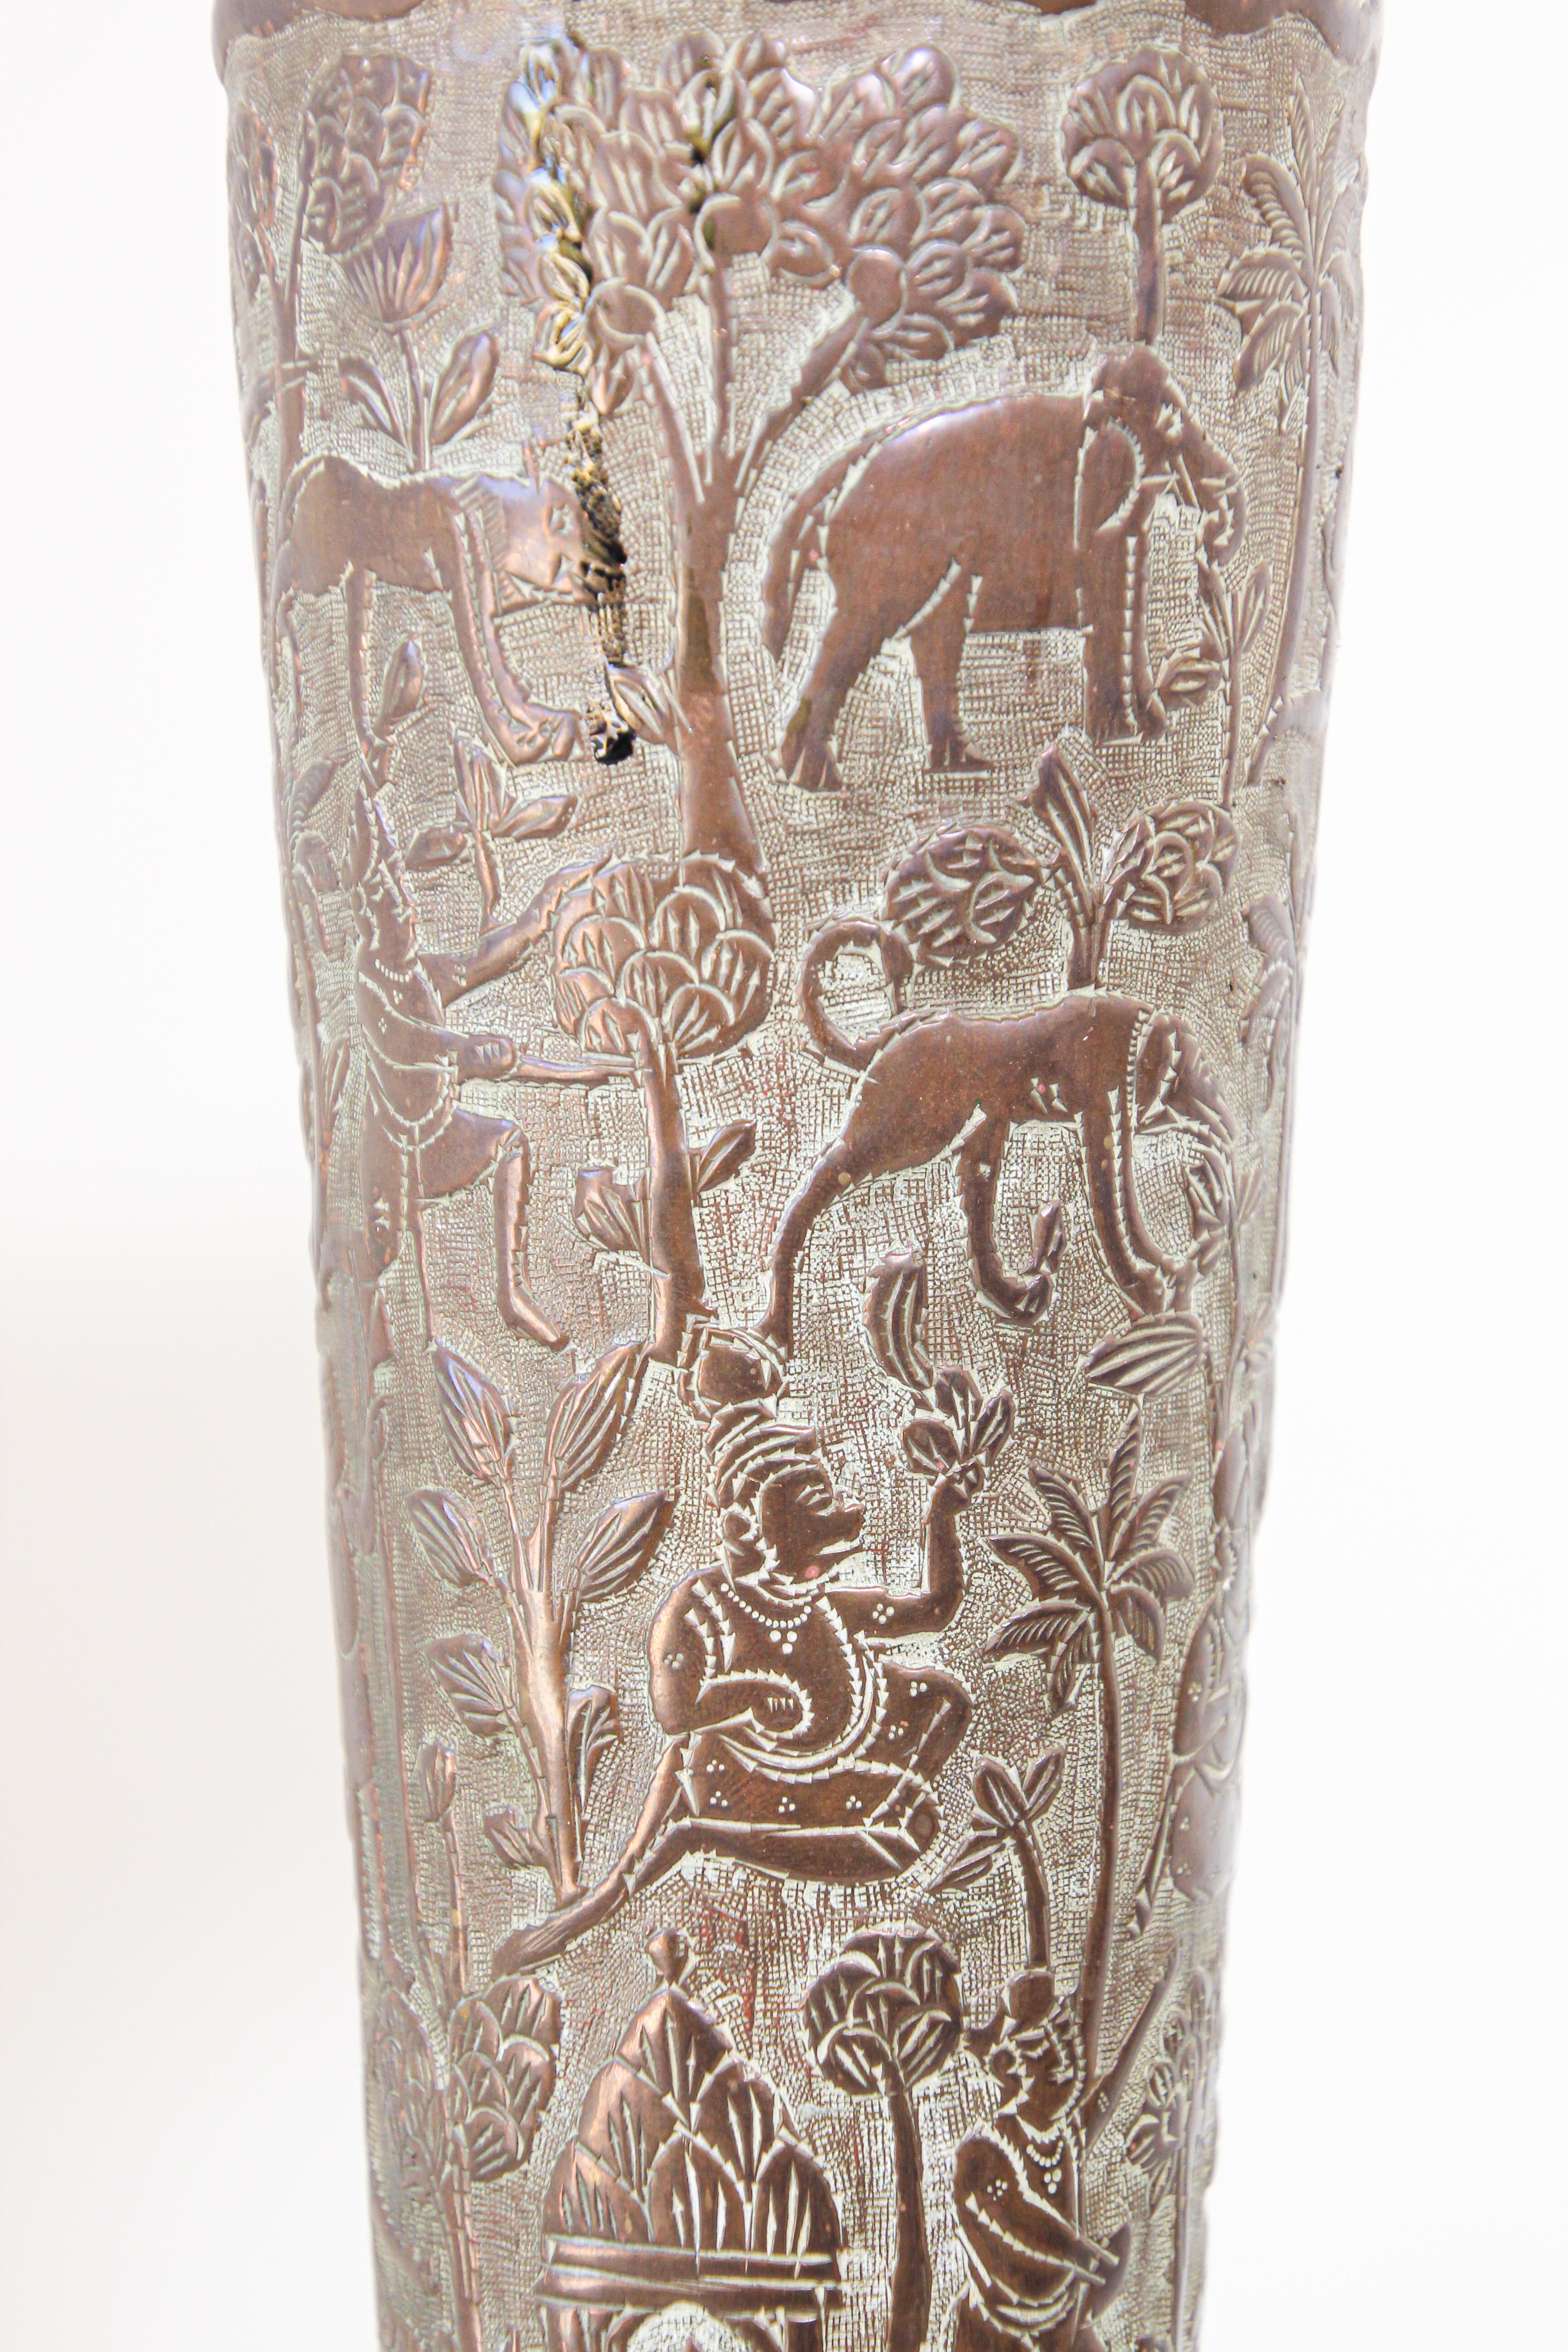 Antique Copper Vase with Hindu Scenes, 19th Century For Sale 1